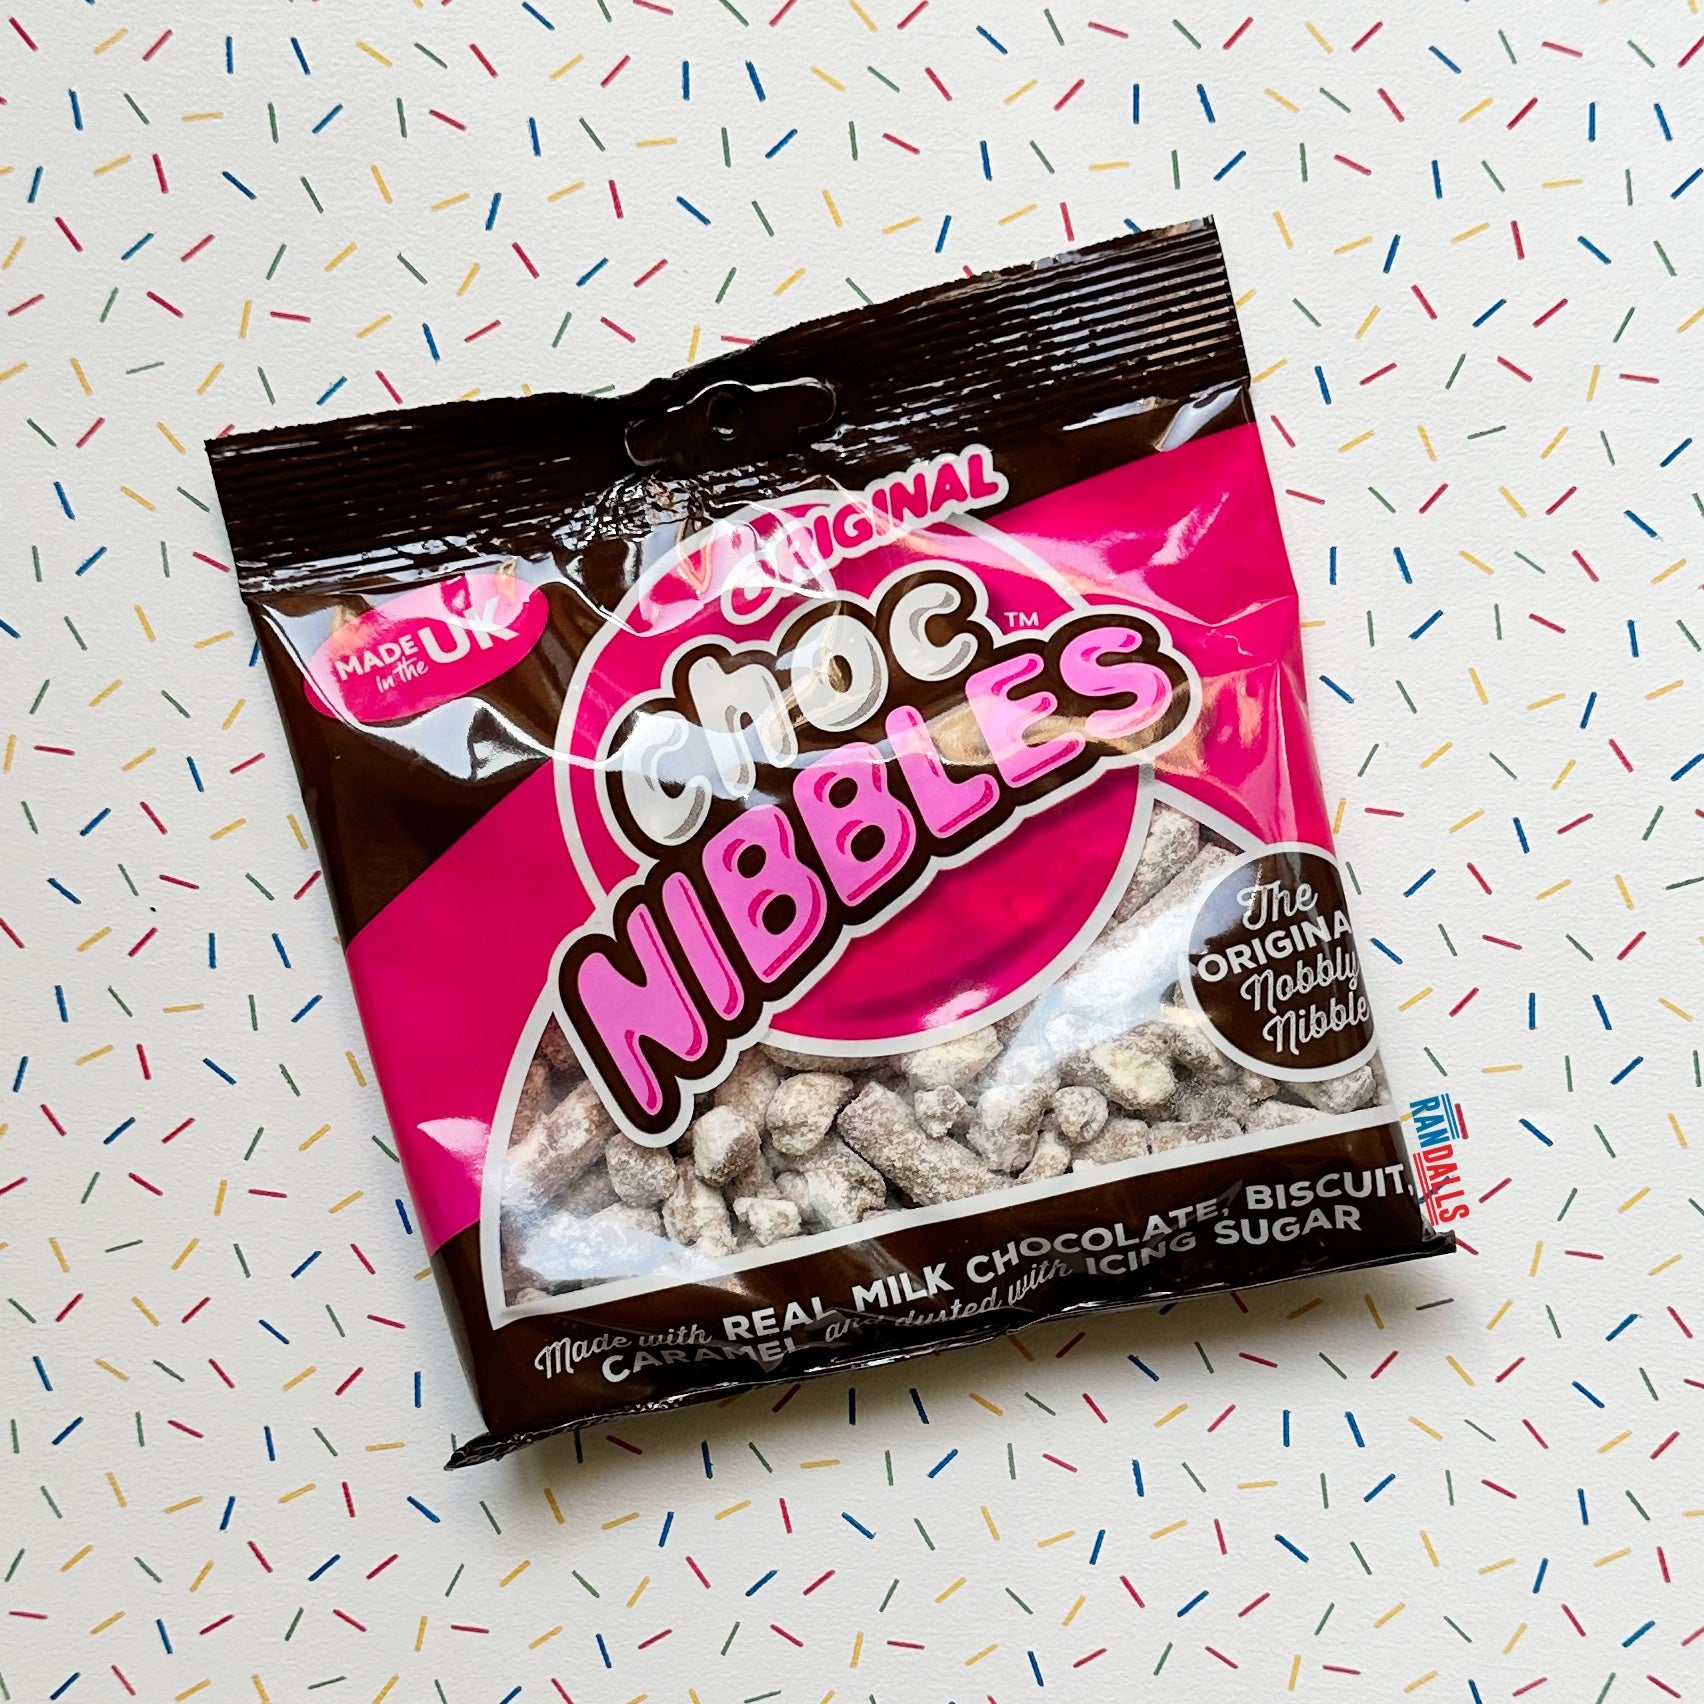 choc nibbles, original choc nibbles, chocolate nibbles, the original nobbly nibble, british, randalls, randallsuk